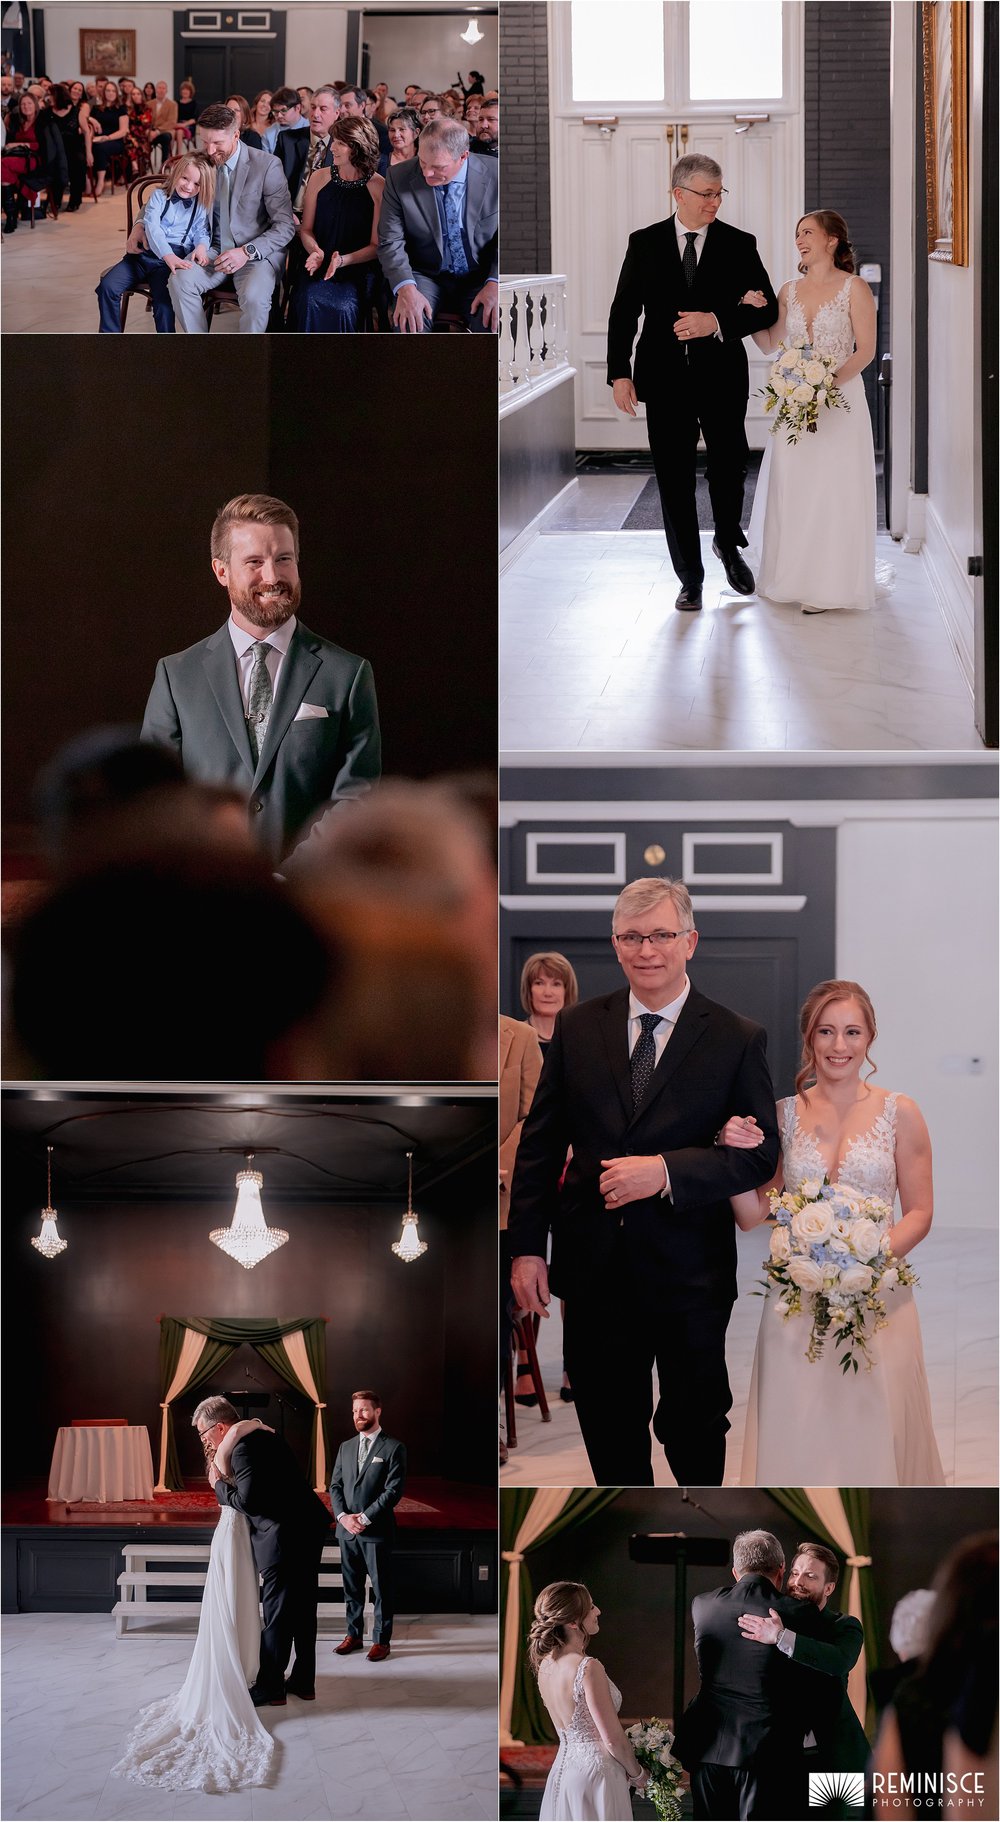 17-artistic-candid-creative-fun-wedding-day-photos-bride-groom-fitzgerald.JPG